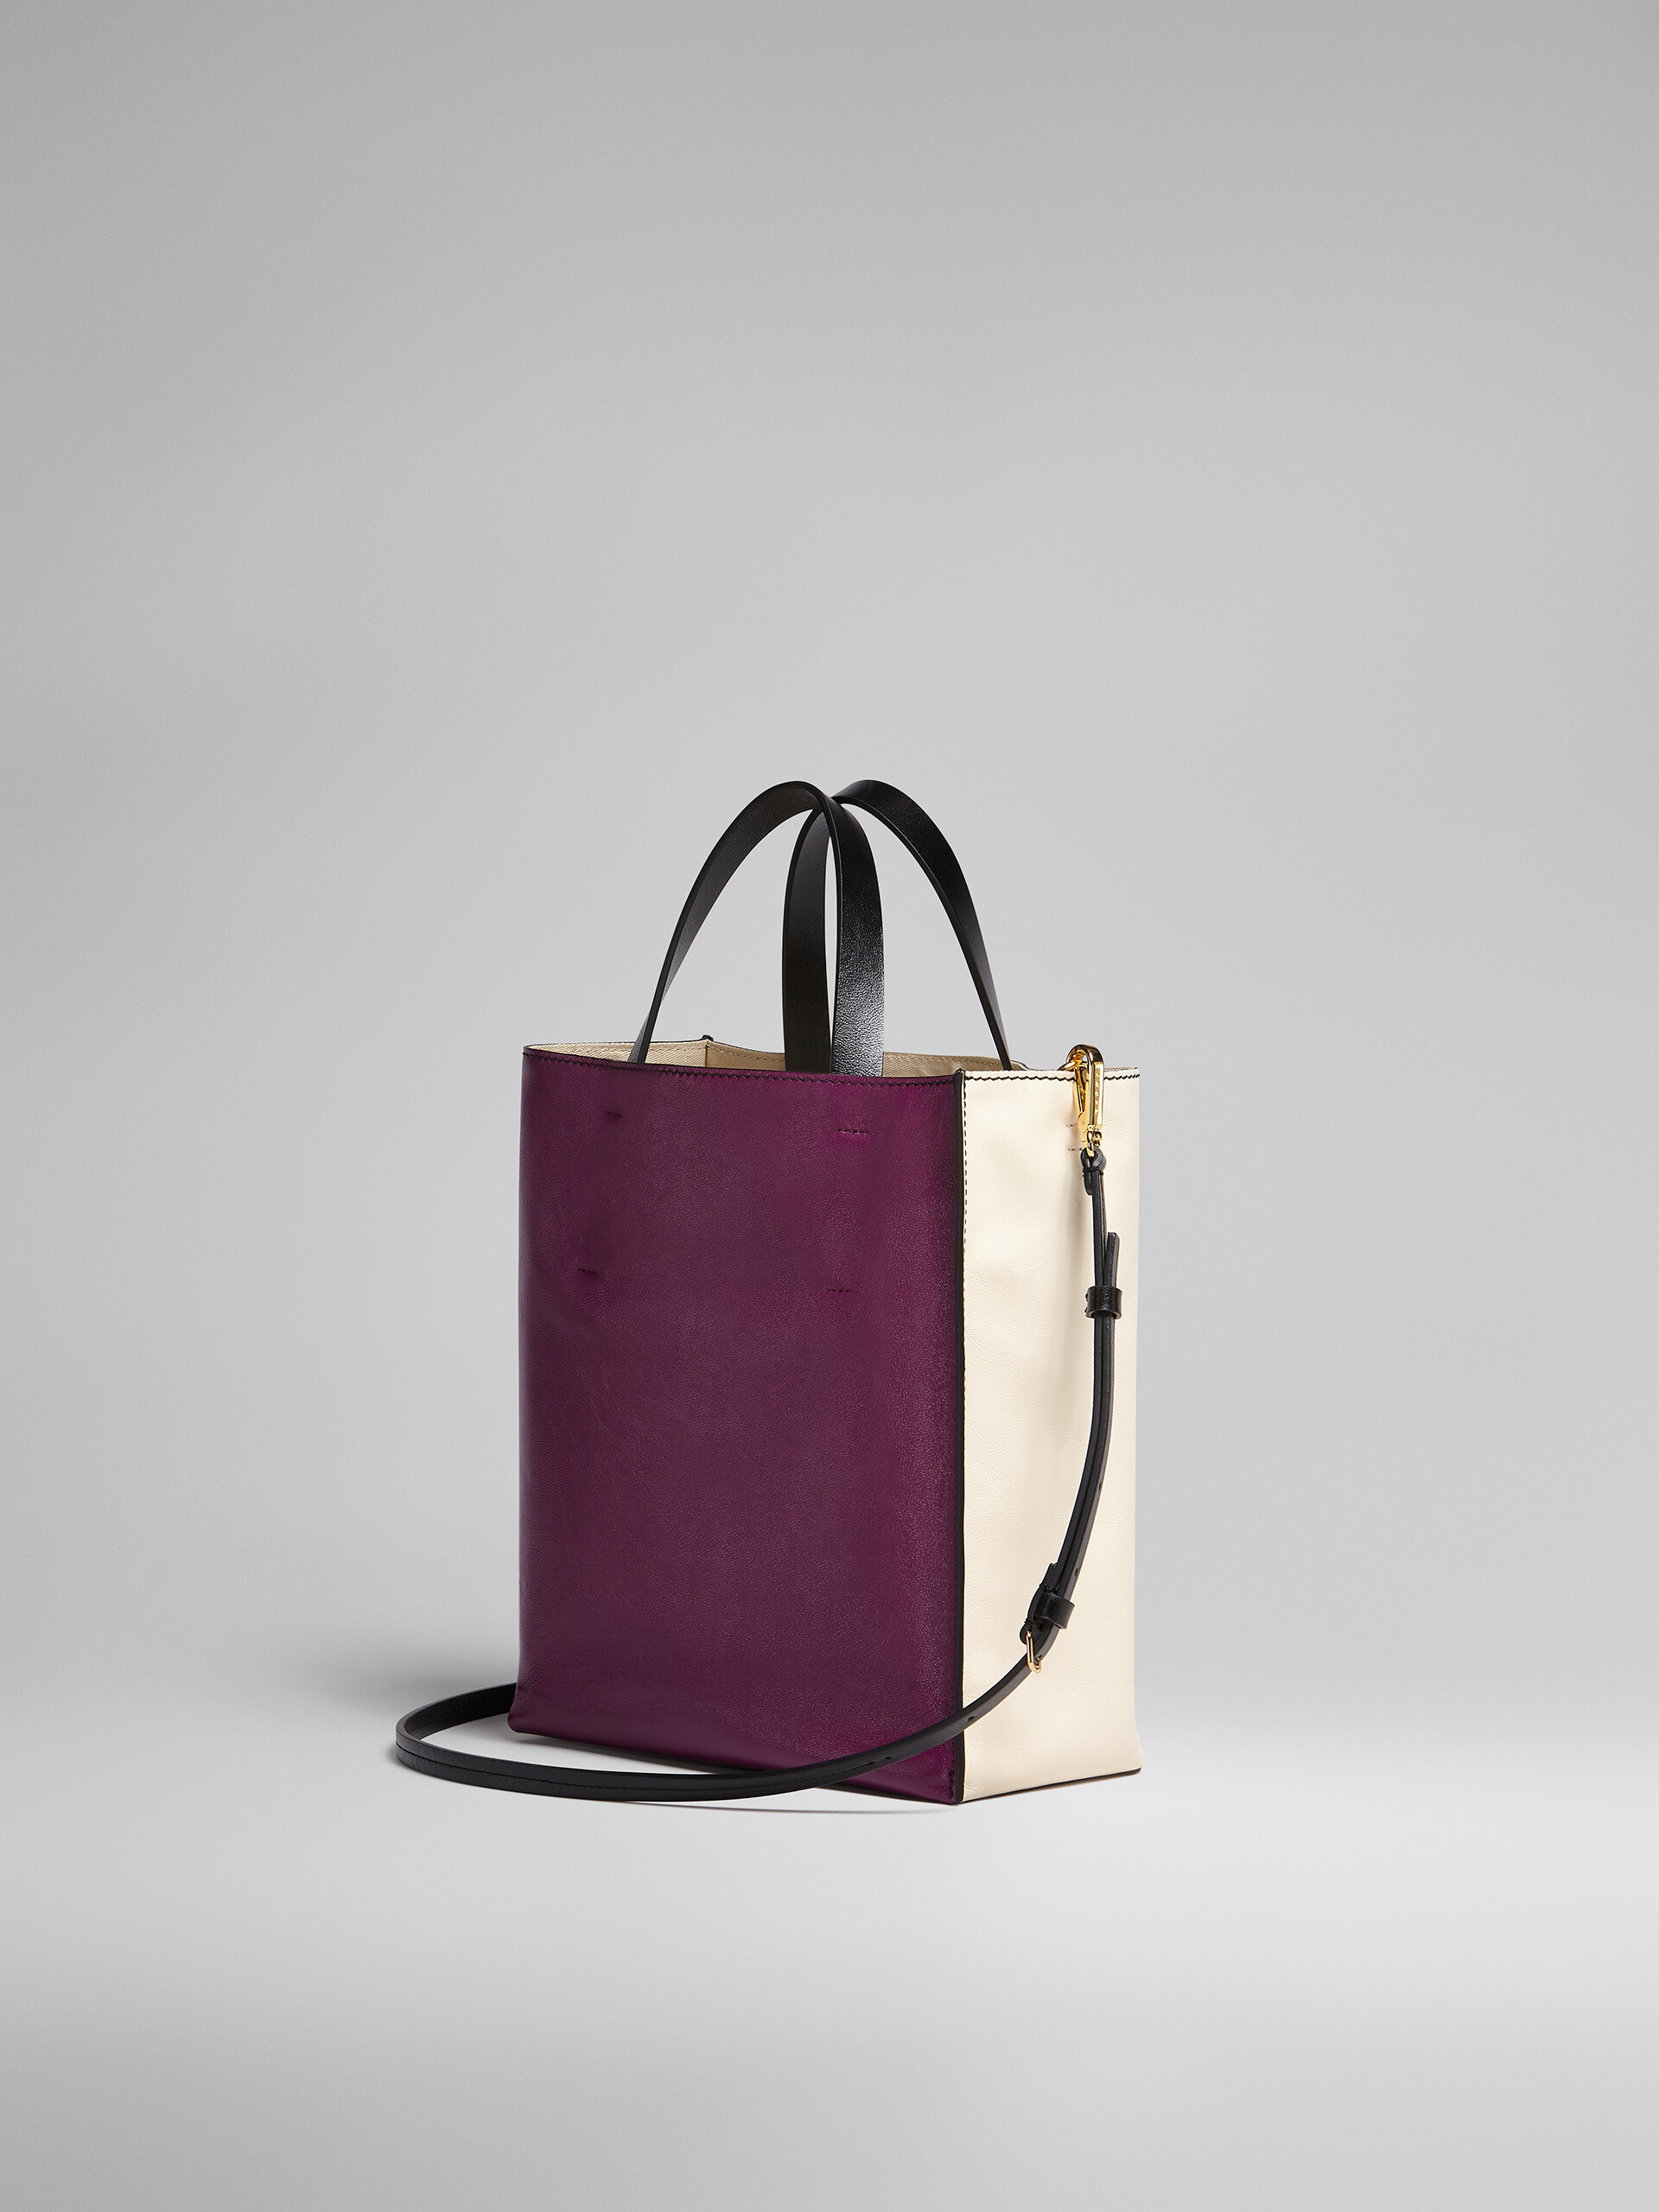 Totes bags Marni - Juliette leather bag - BMMP0044Y1P343000N99